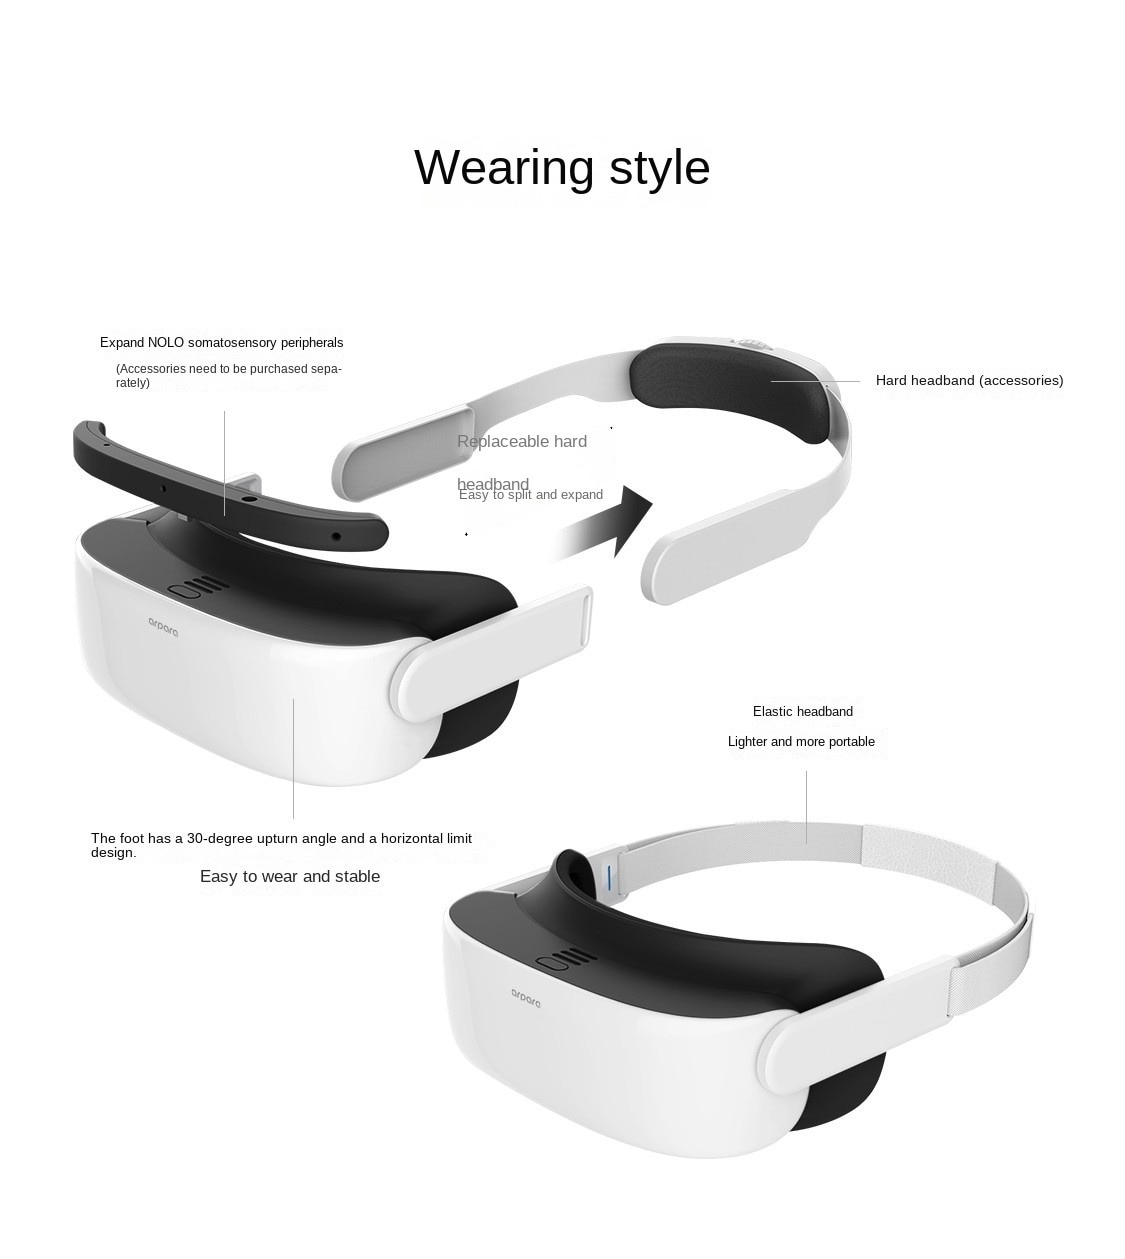 Arpara 5K VR Headset 3D VR Glasses Conntect PC Or Smart Phone VR Helmet Lite Version VR Glasses Newest 2022